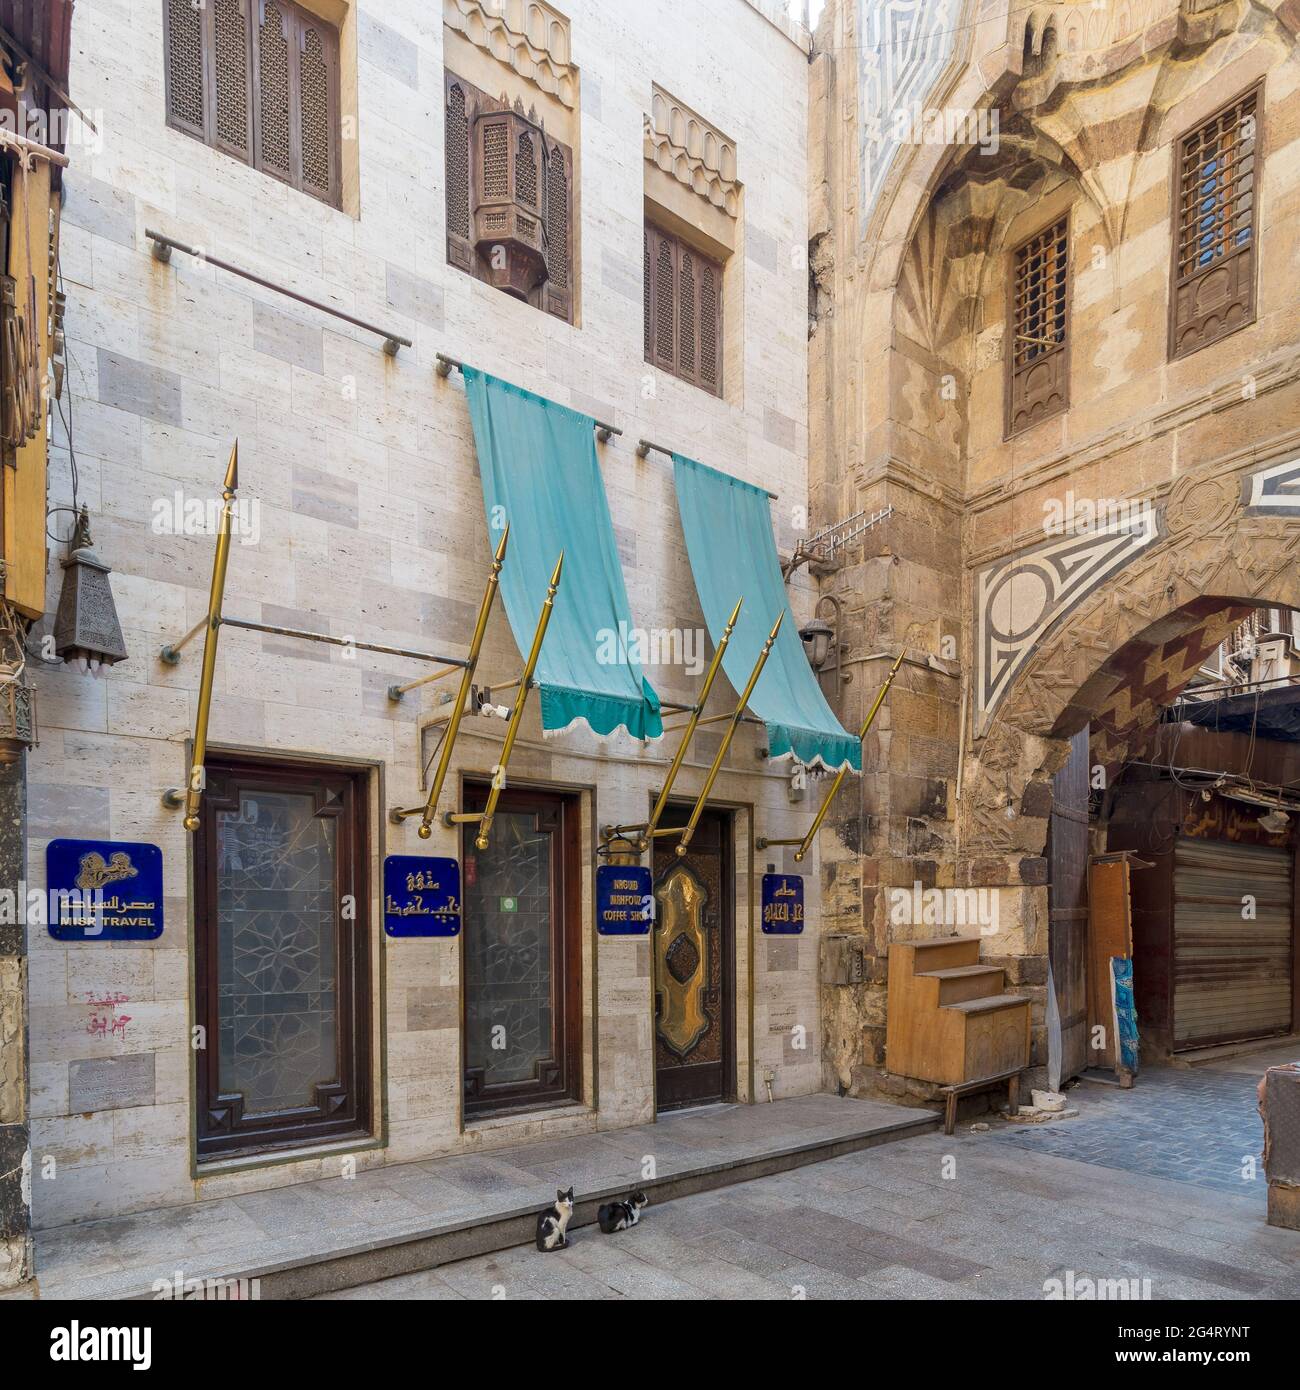 EL CAIRO, EGIPTO - 26 de junio de 2020: El Cairo, Egipto - 26 2020 de junio: Moderna y famosa cafetería Naguib Mahfouz, situada en la histórica era de Mamluk Khan al-Khalili fama Foto de stock